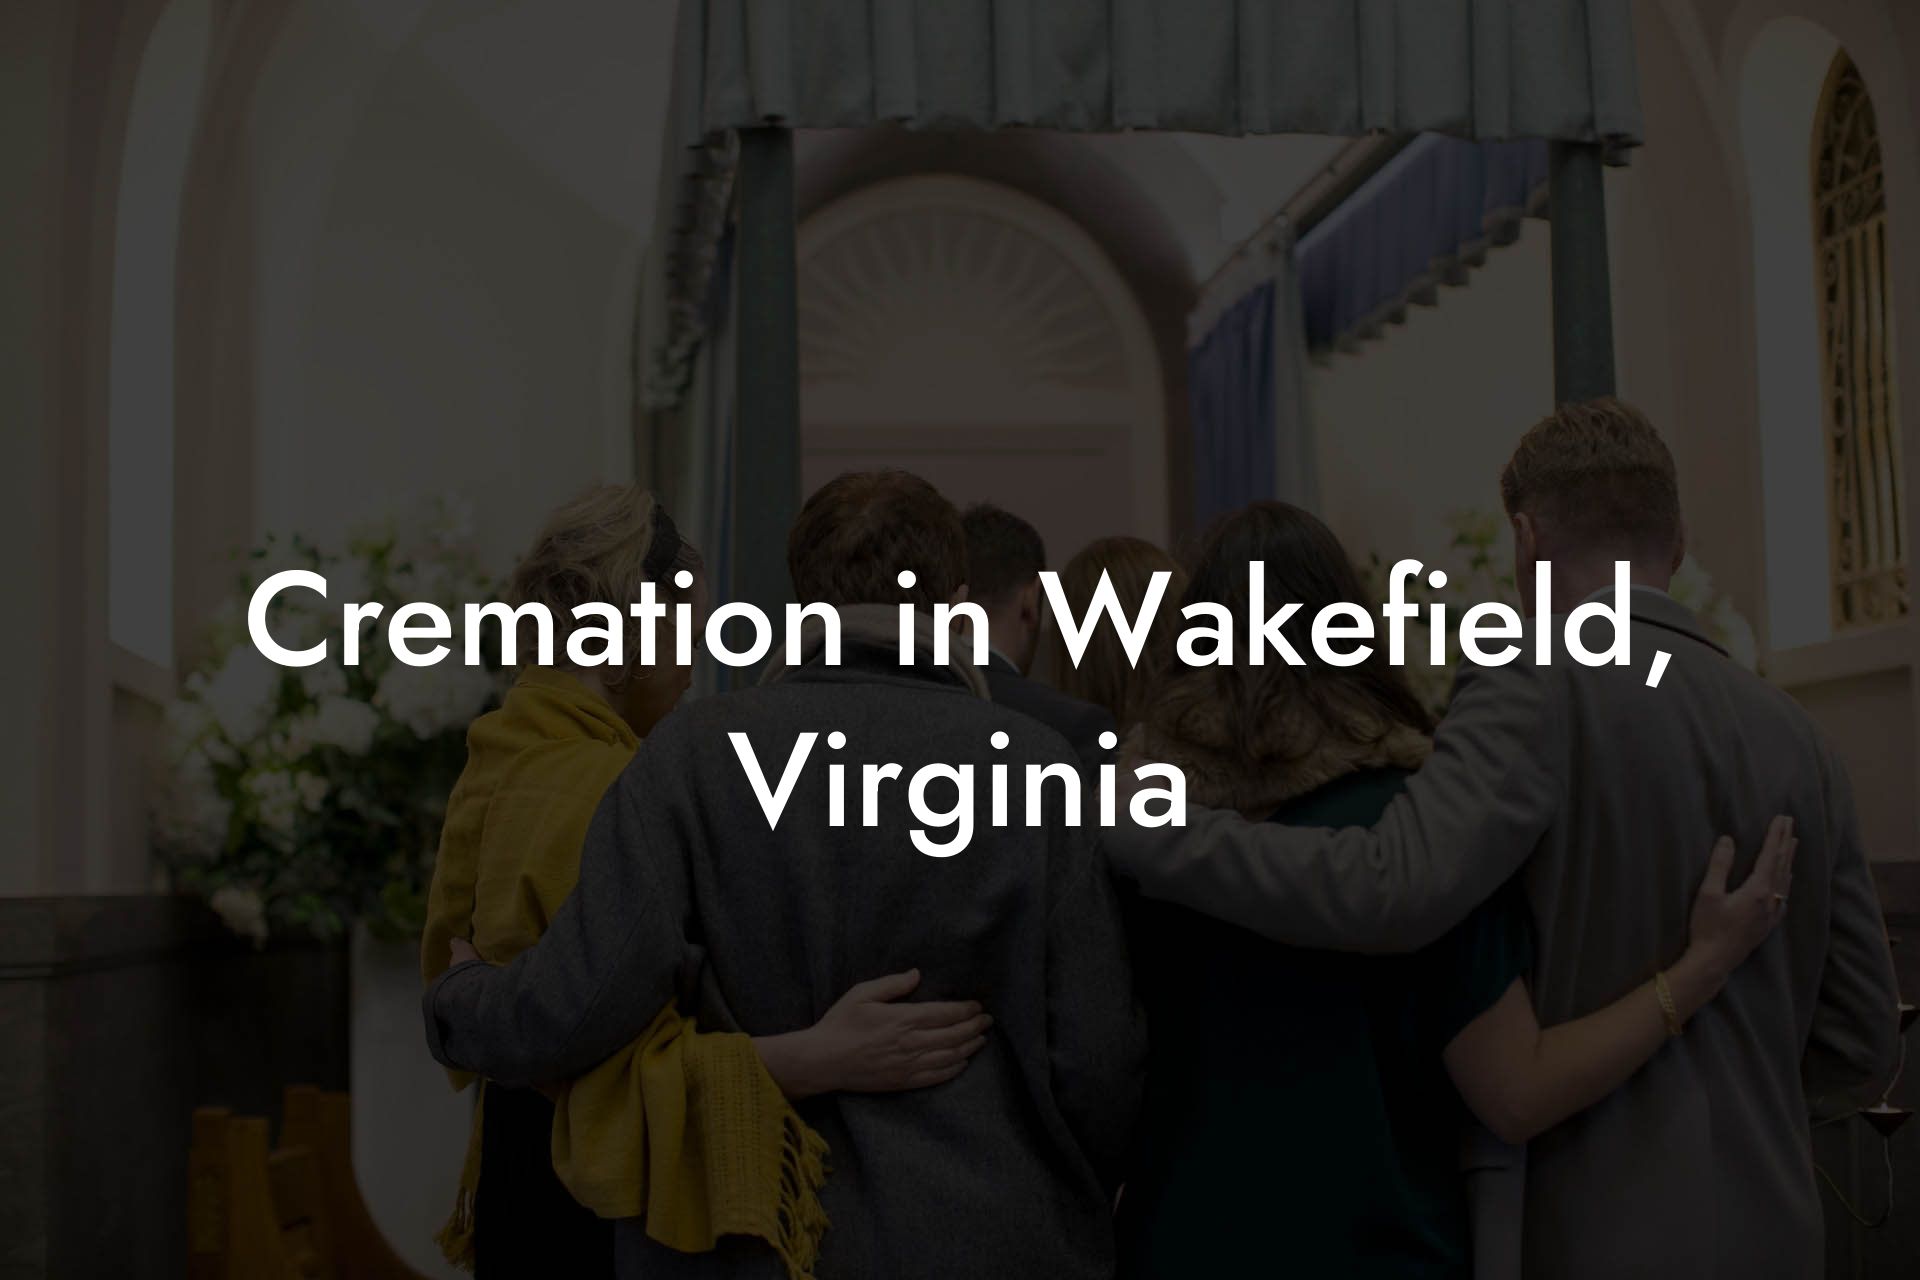 Cremation in Wakefield, Virginia